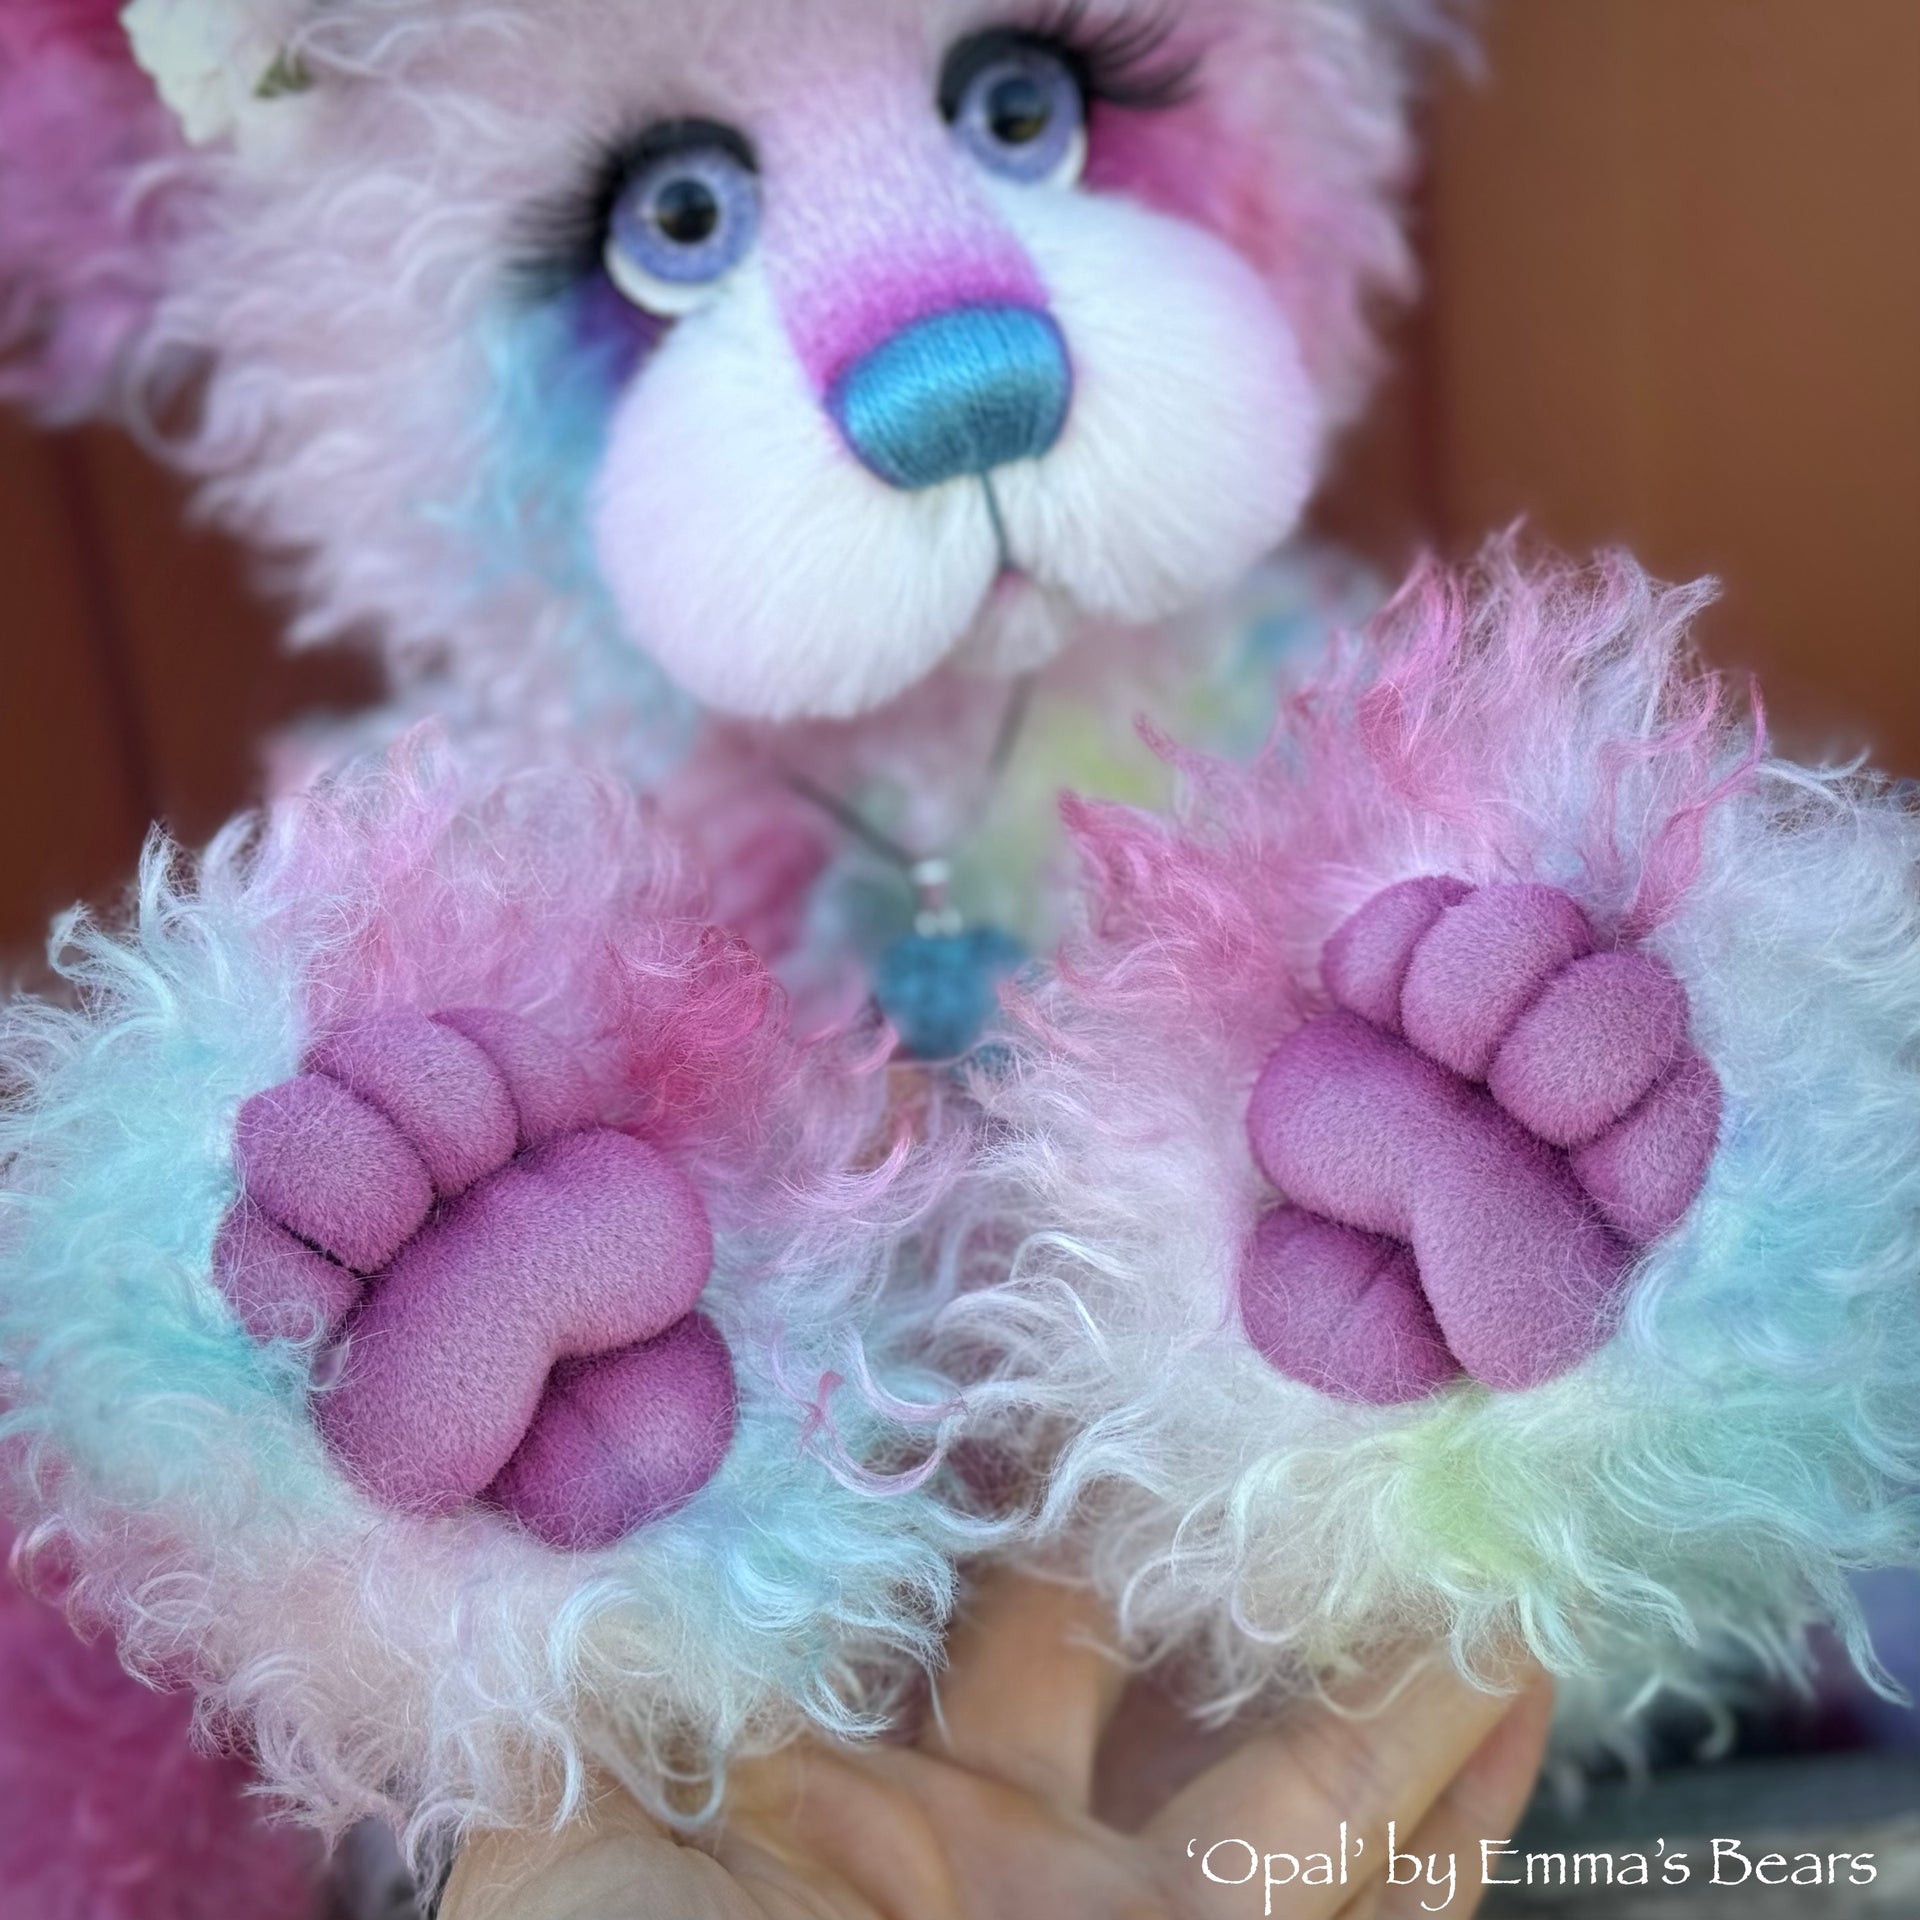 Opal - 16" Hand-dyed Curlylocks Mohair Artist Bear by Emma's Bears - OOAK